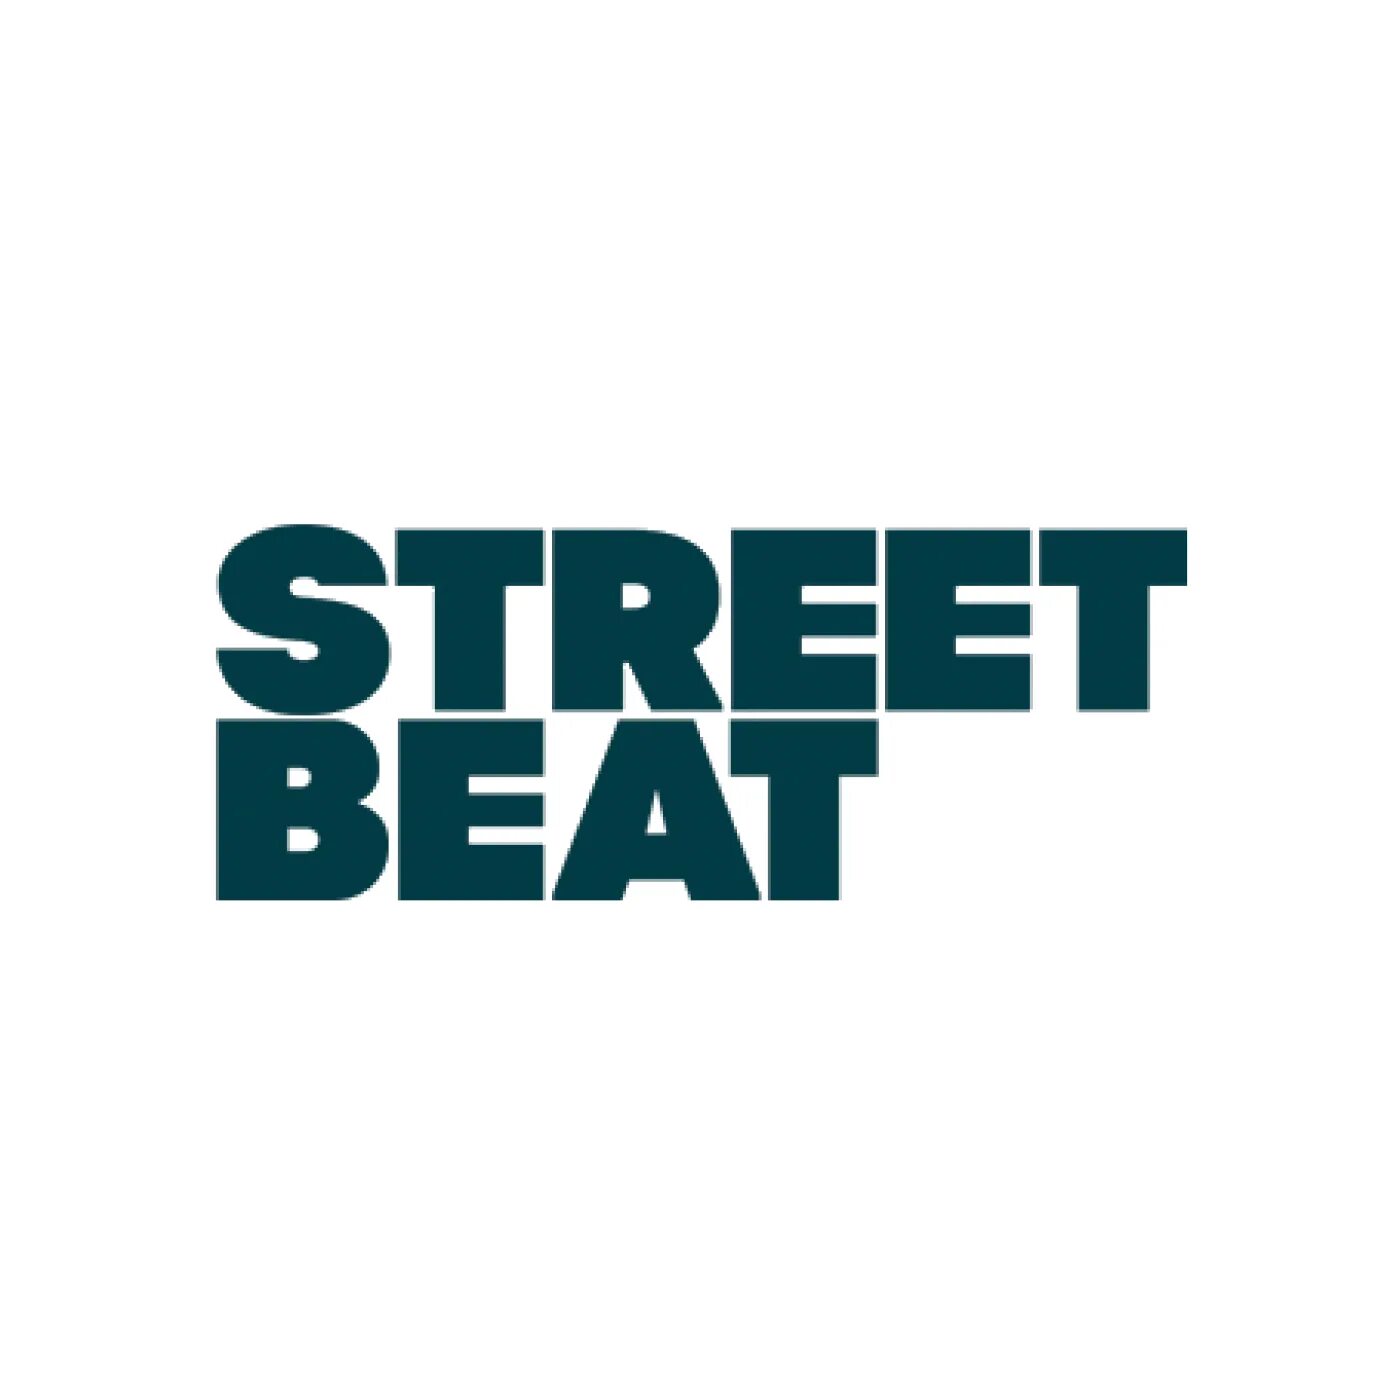 Streetbeat ru. Street Beat. Street Beat logo. Street Beat Ростов. Street Beat Омск.